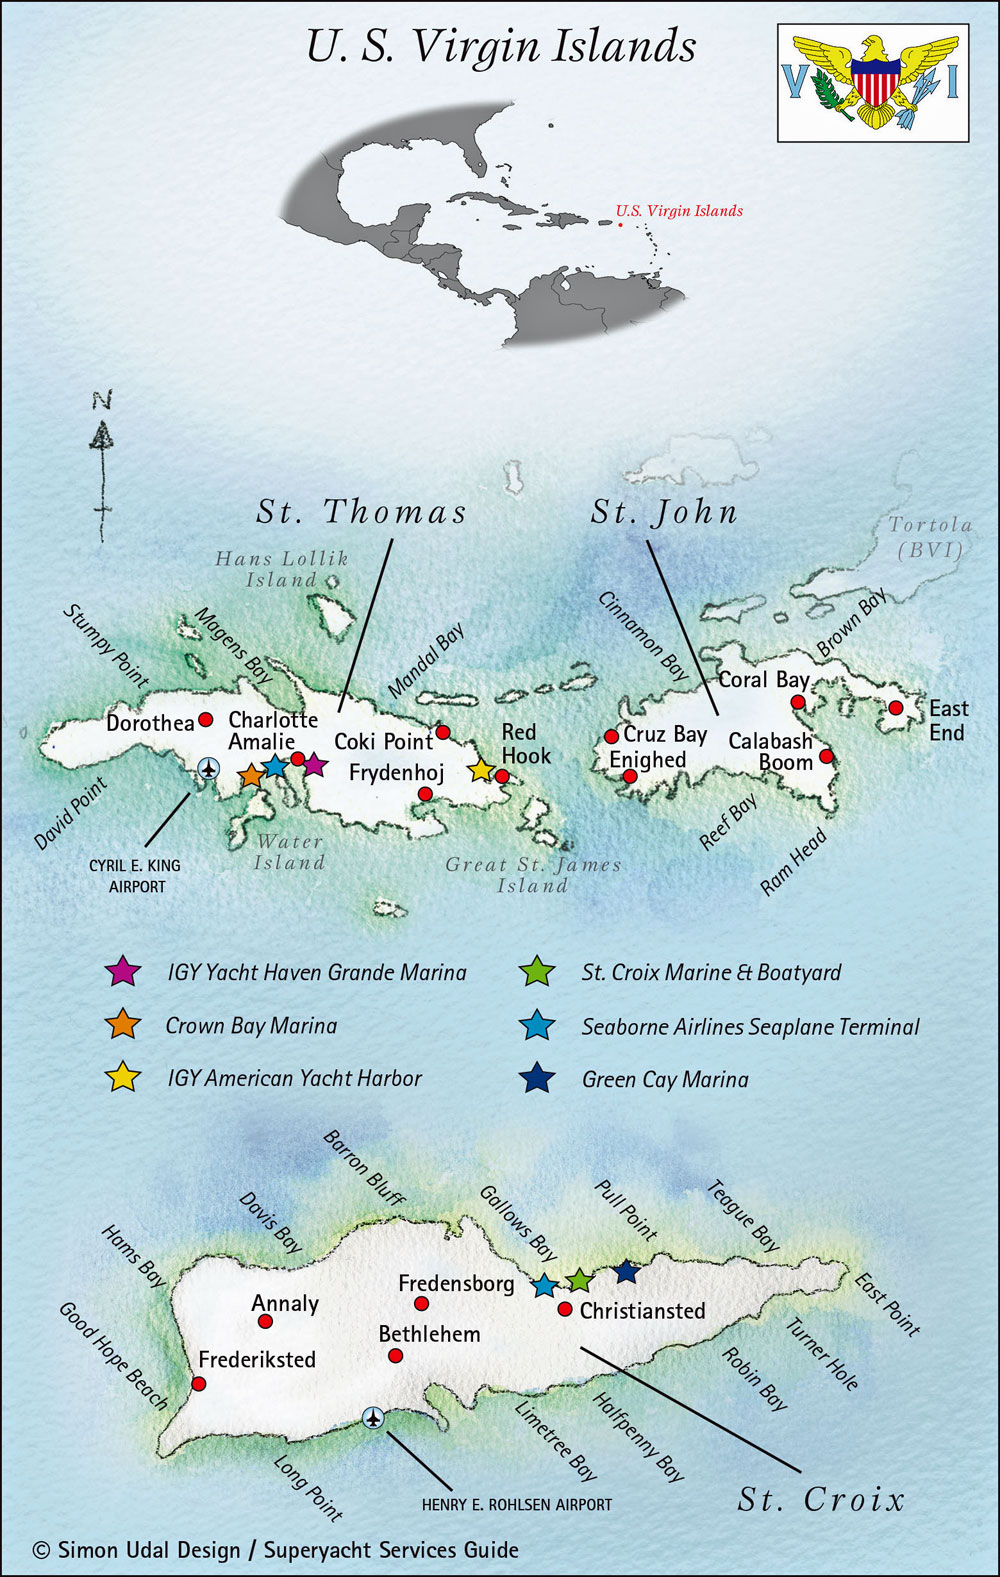 Map of the U.S. Virgin Islands (USVIs) in the Caribbean